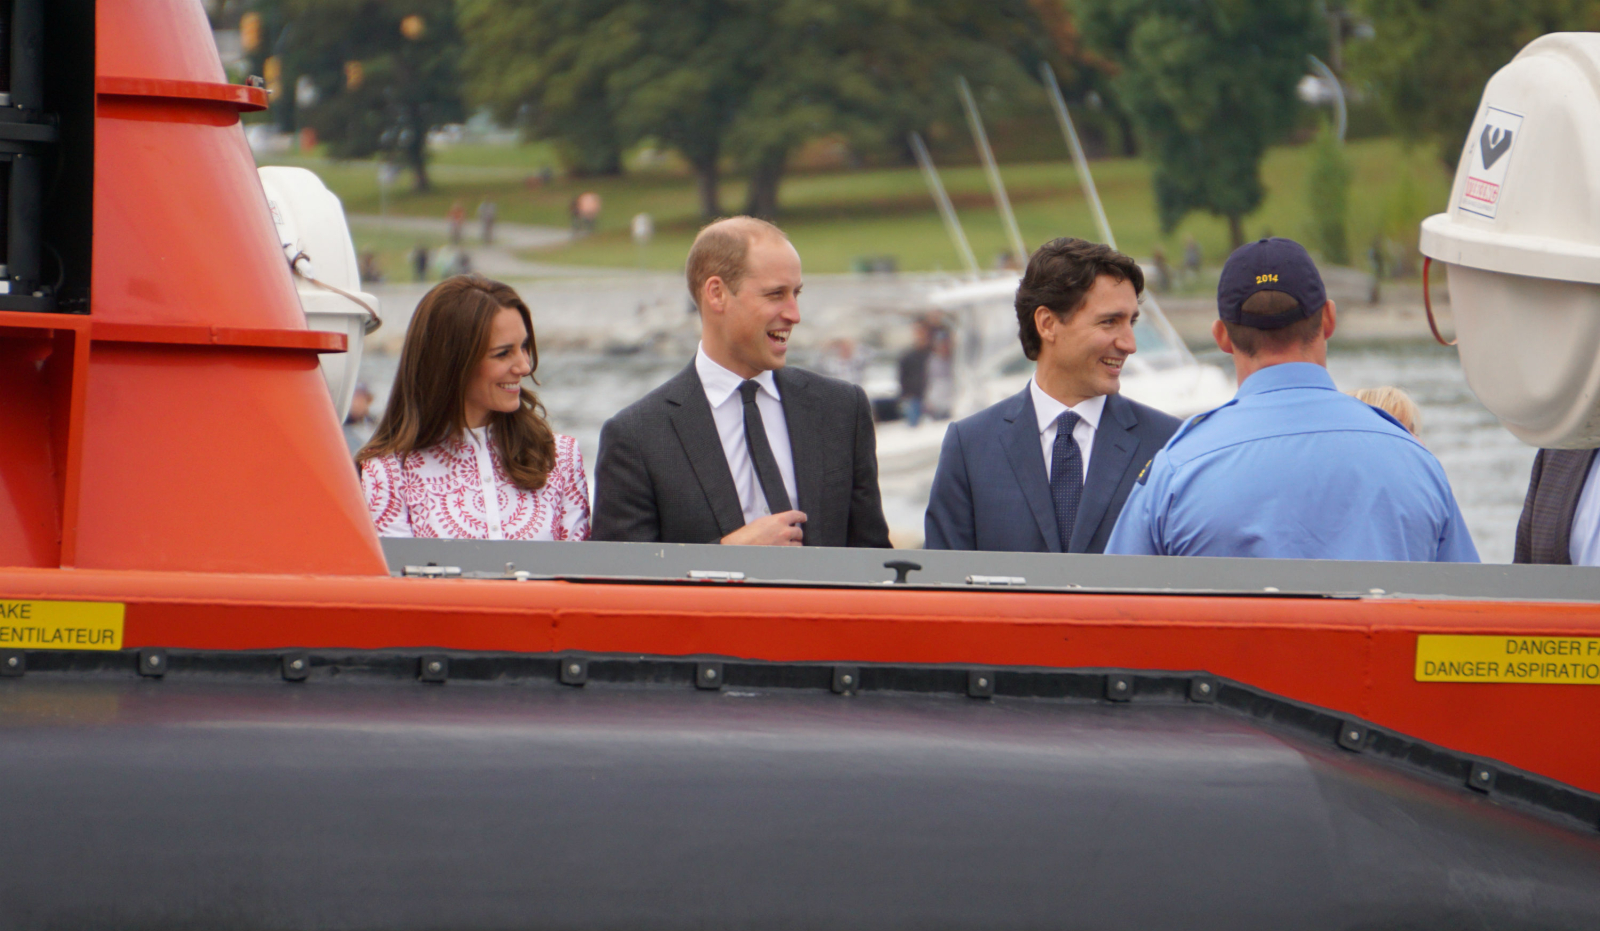 Justin Trudeau, Sophie Gregoire Trudeau, Kate Middleton, Prince William, royal tour